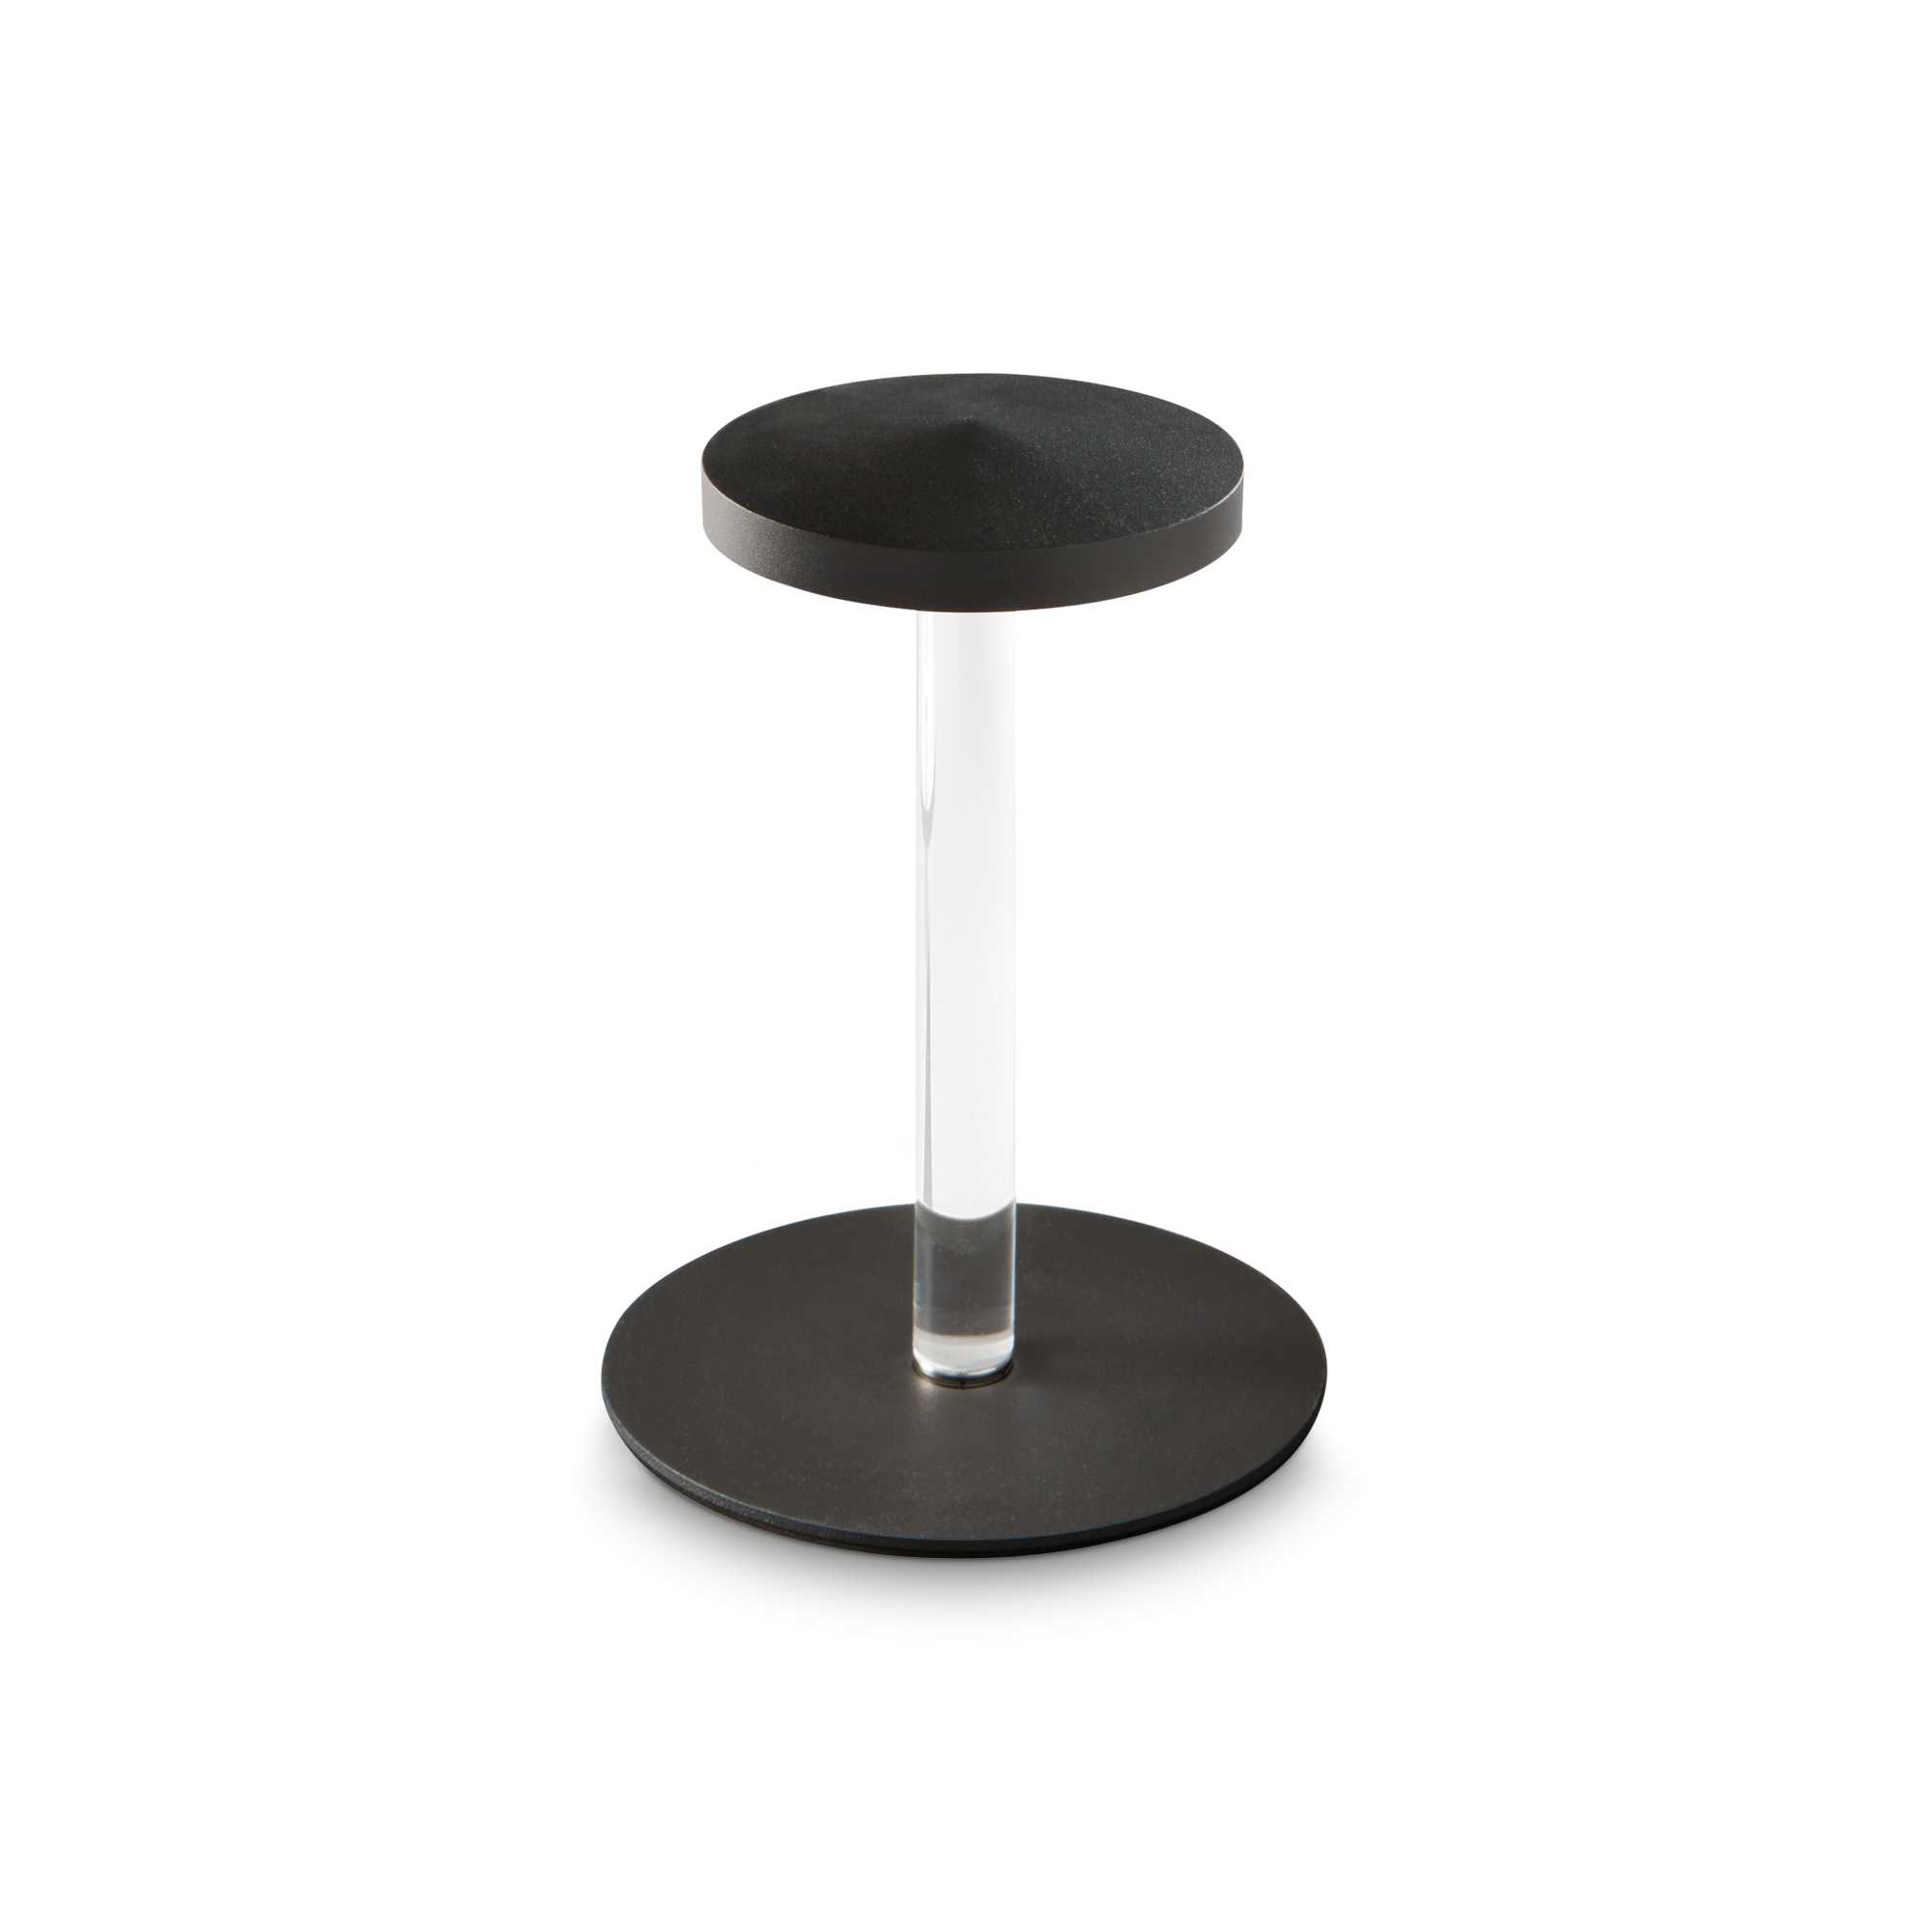 AD hotelska oprema Vanjska stolna lampa Toki tl- Crne boje slika proizvoda